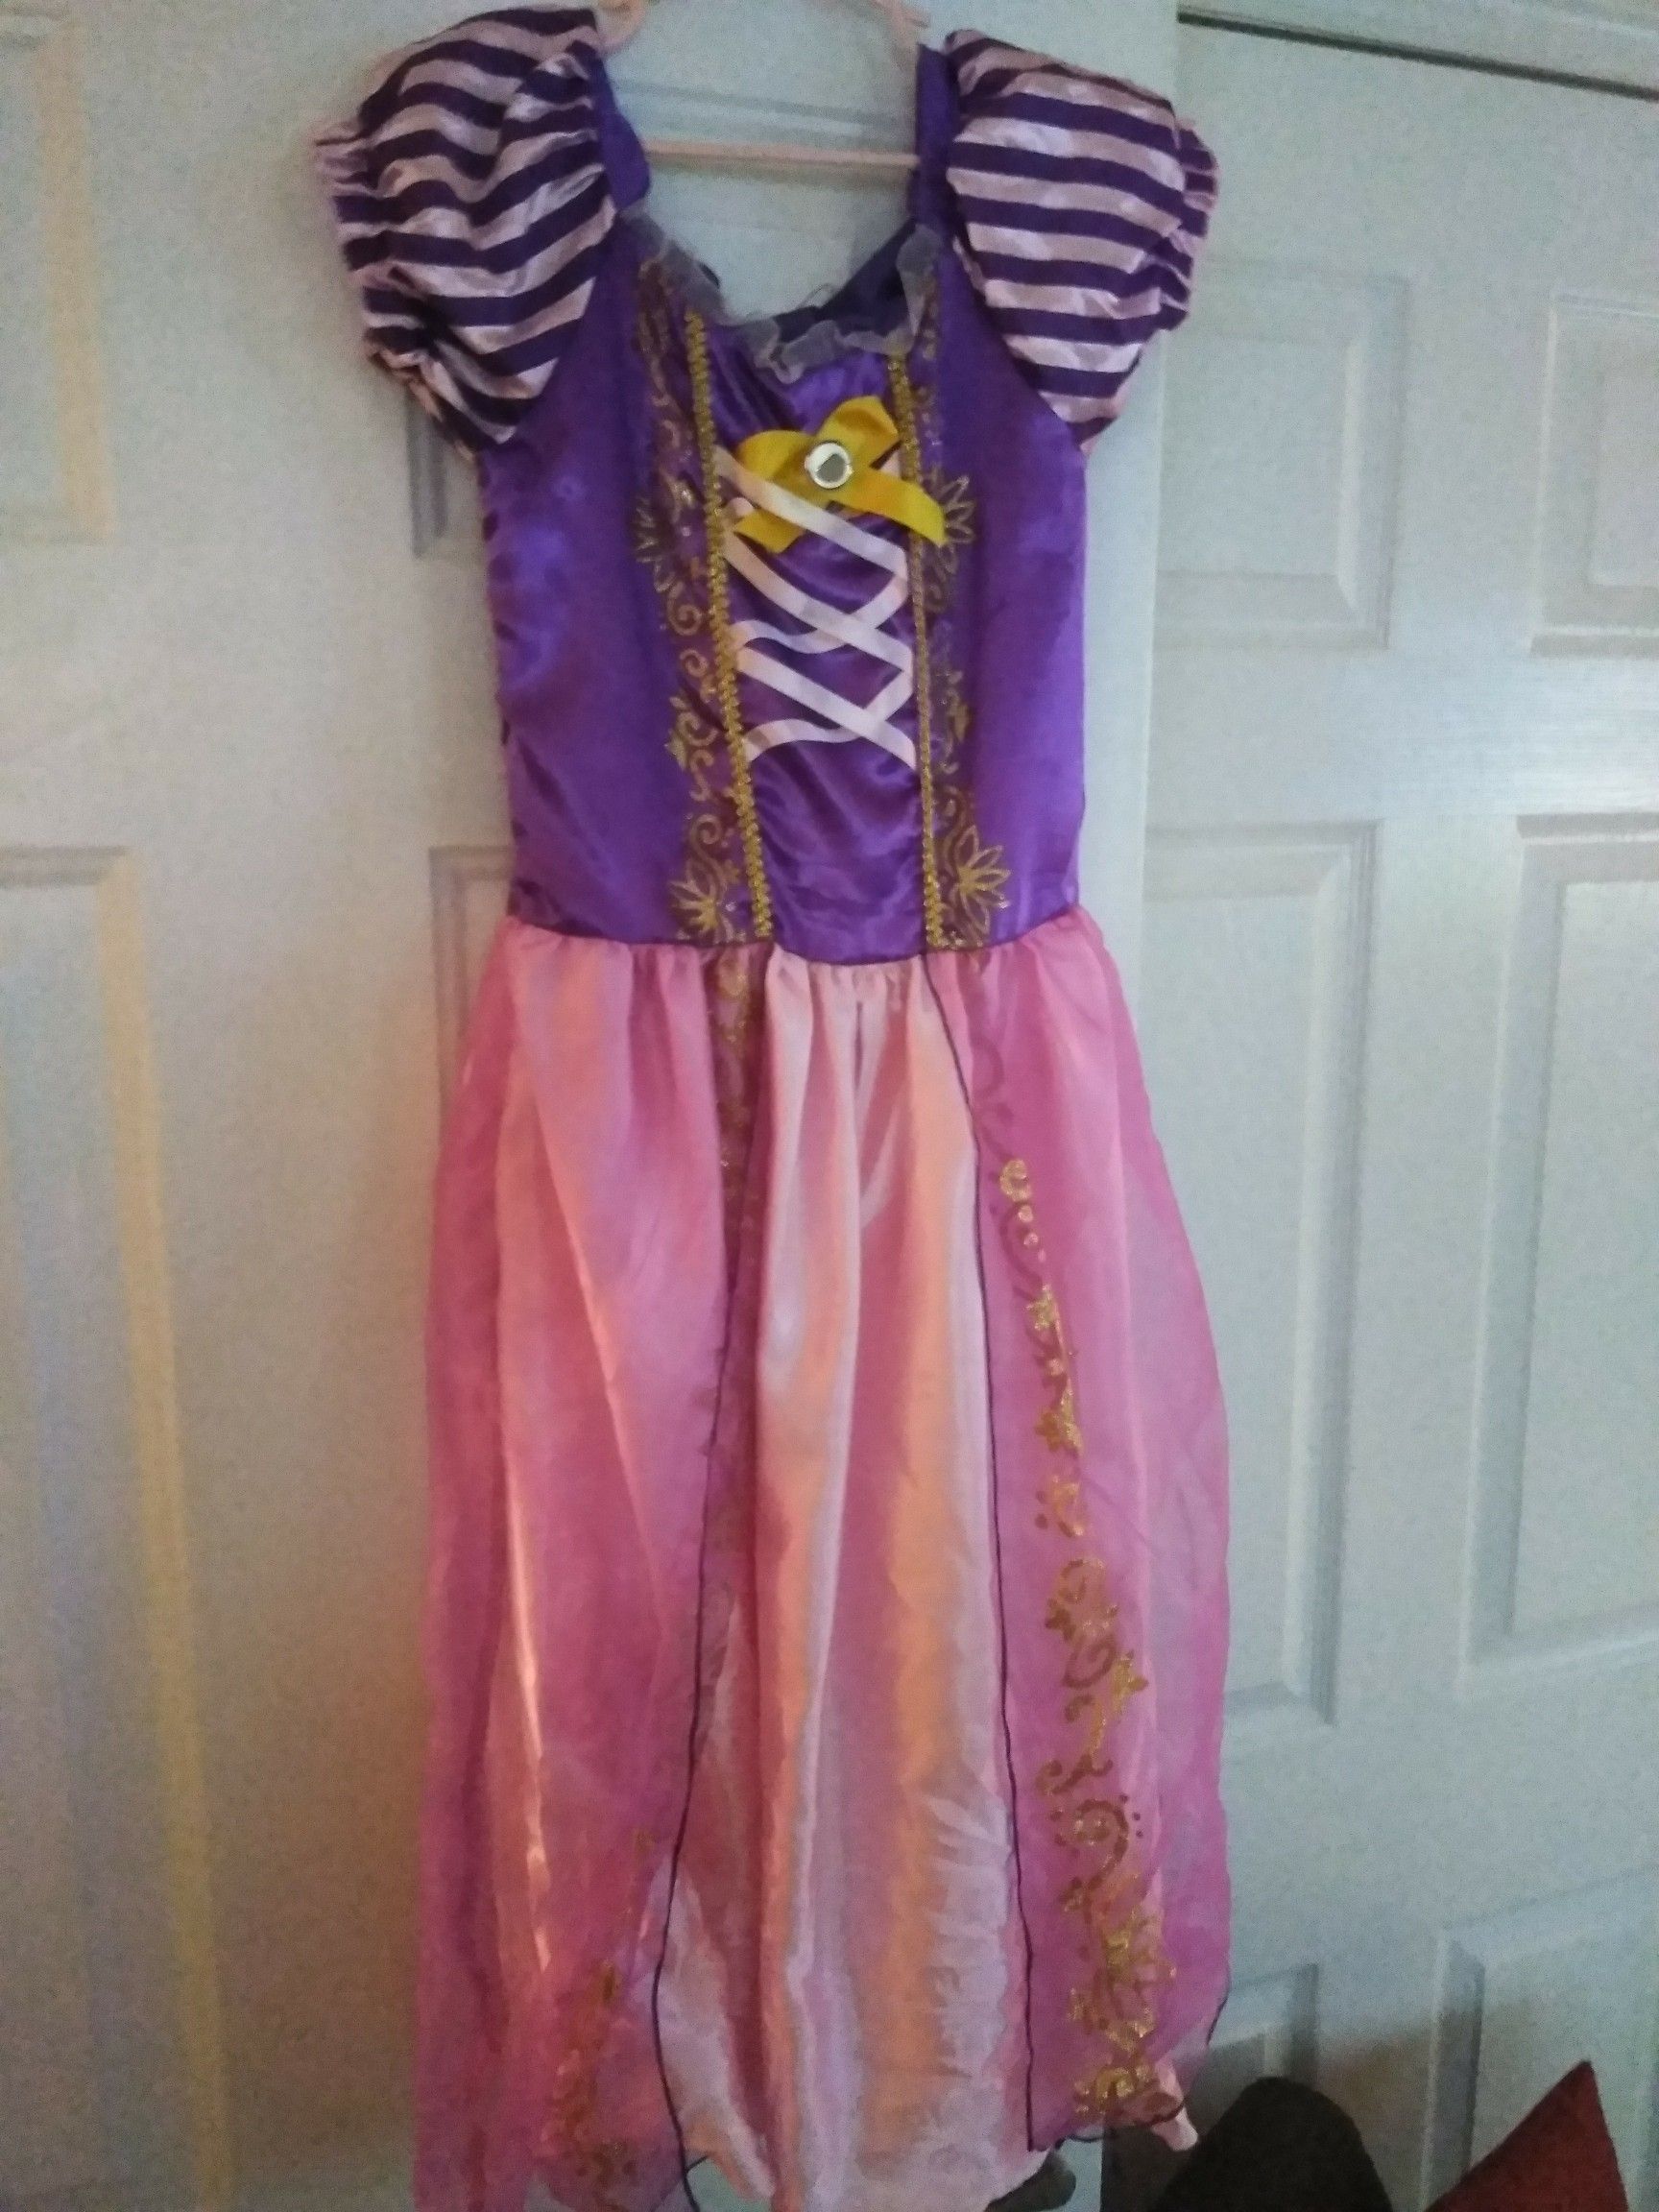 Rapunzel costume - girls size small